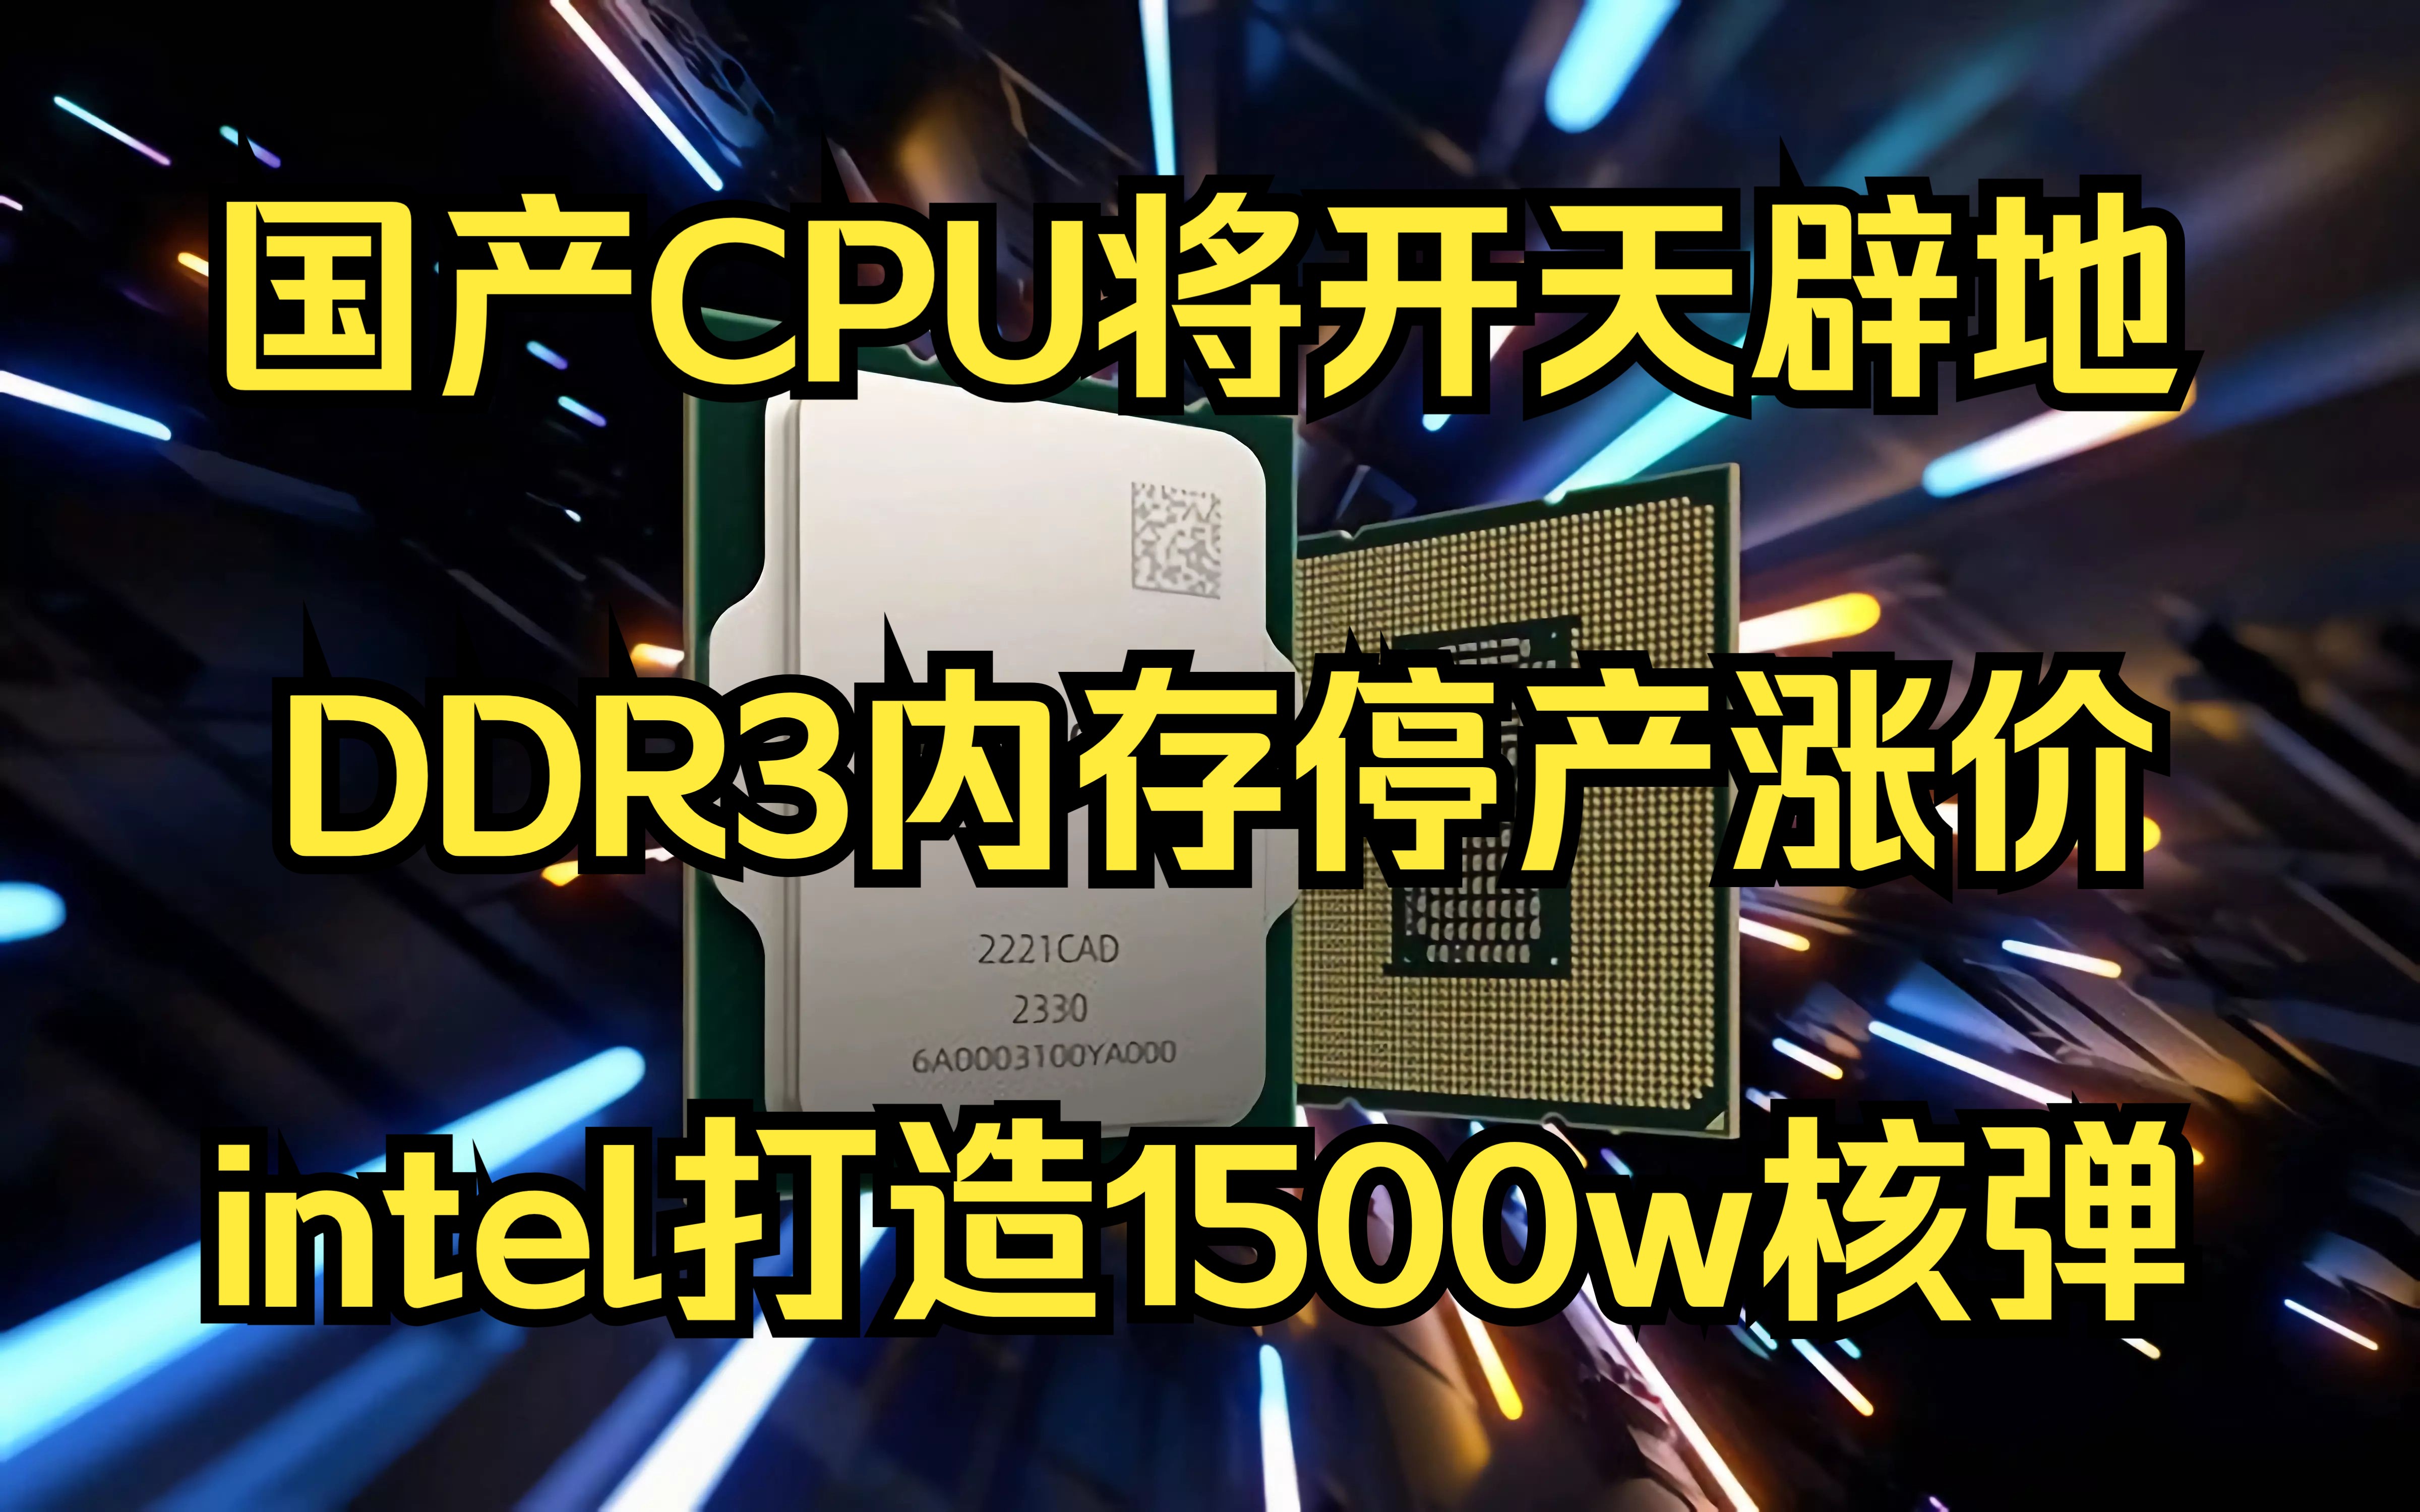 DDR3 内存即将停产，原因及影响深度解析  第3张